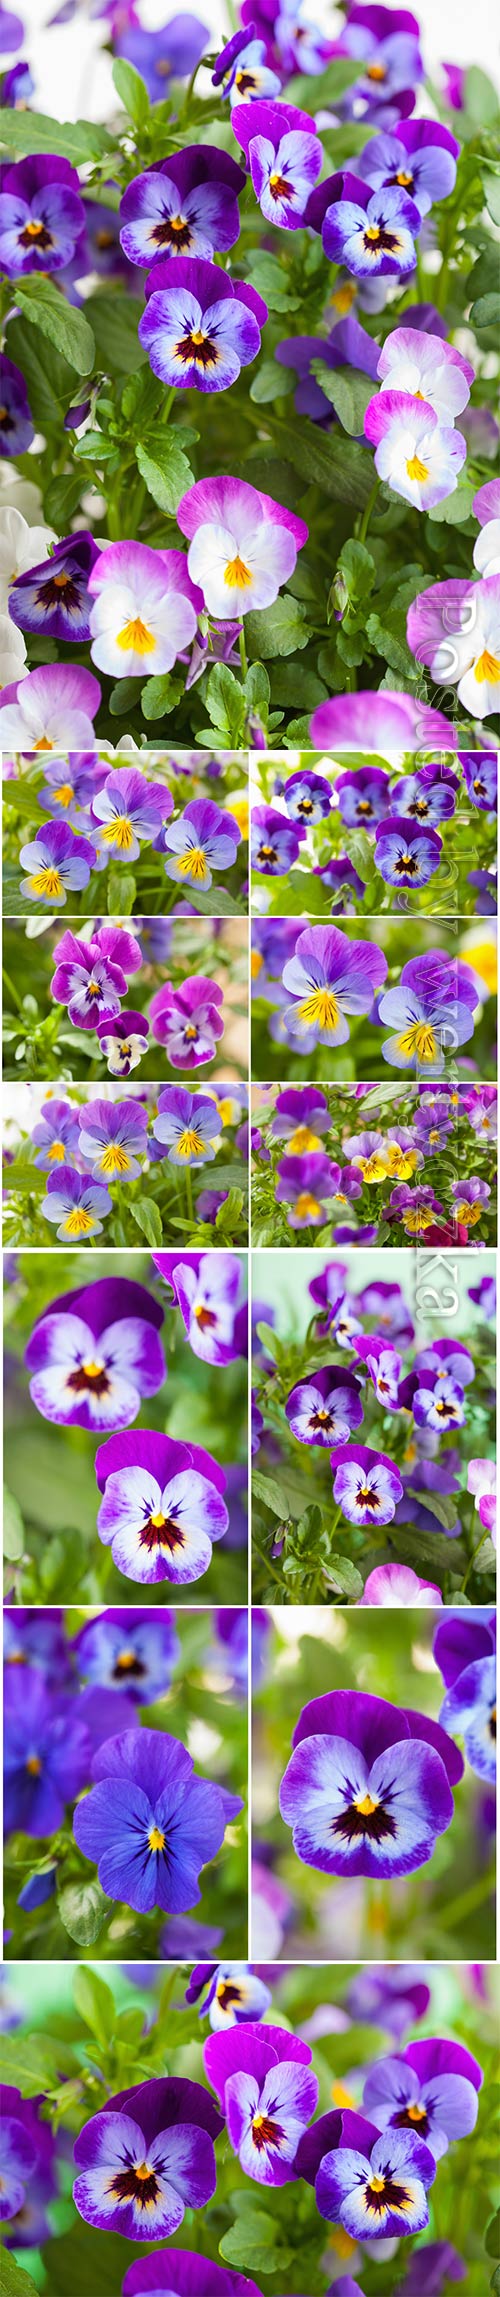 Beautiful pansy summer flowers stock photo